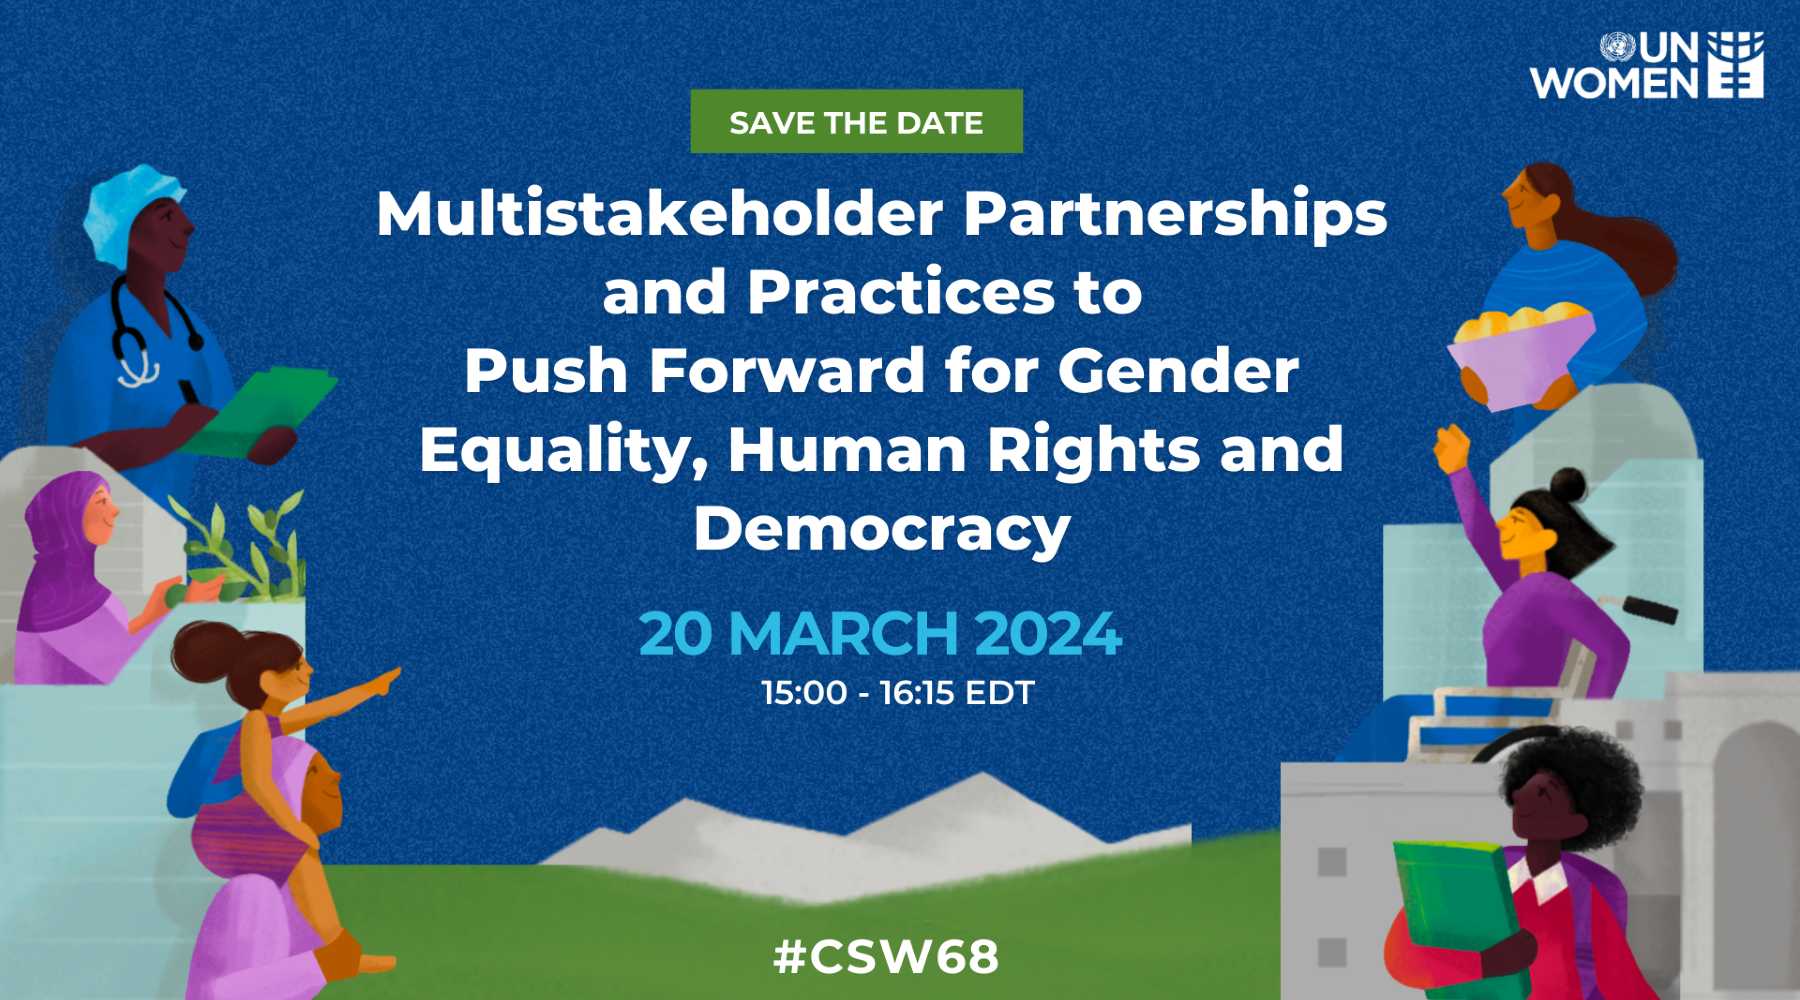 Multistakeholder partnerships CSW68 meeting